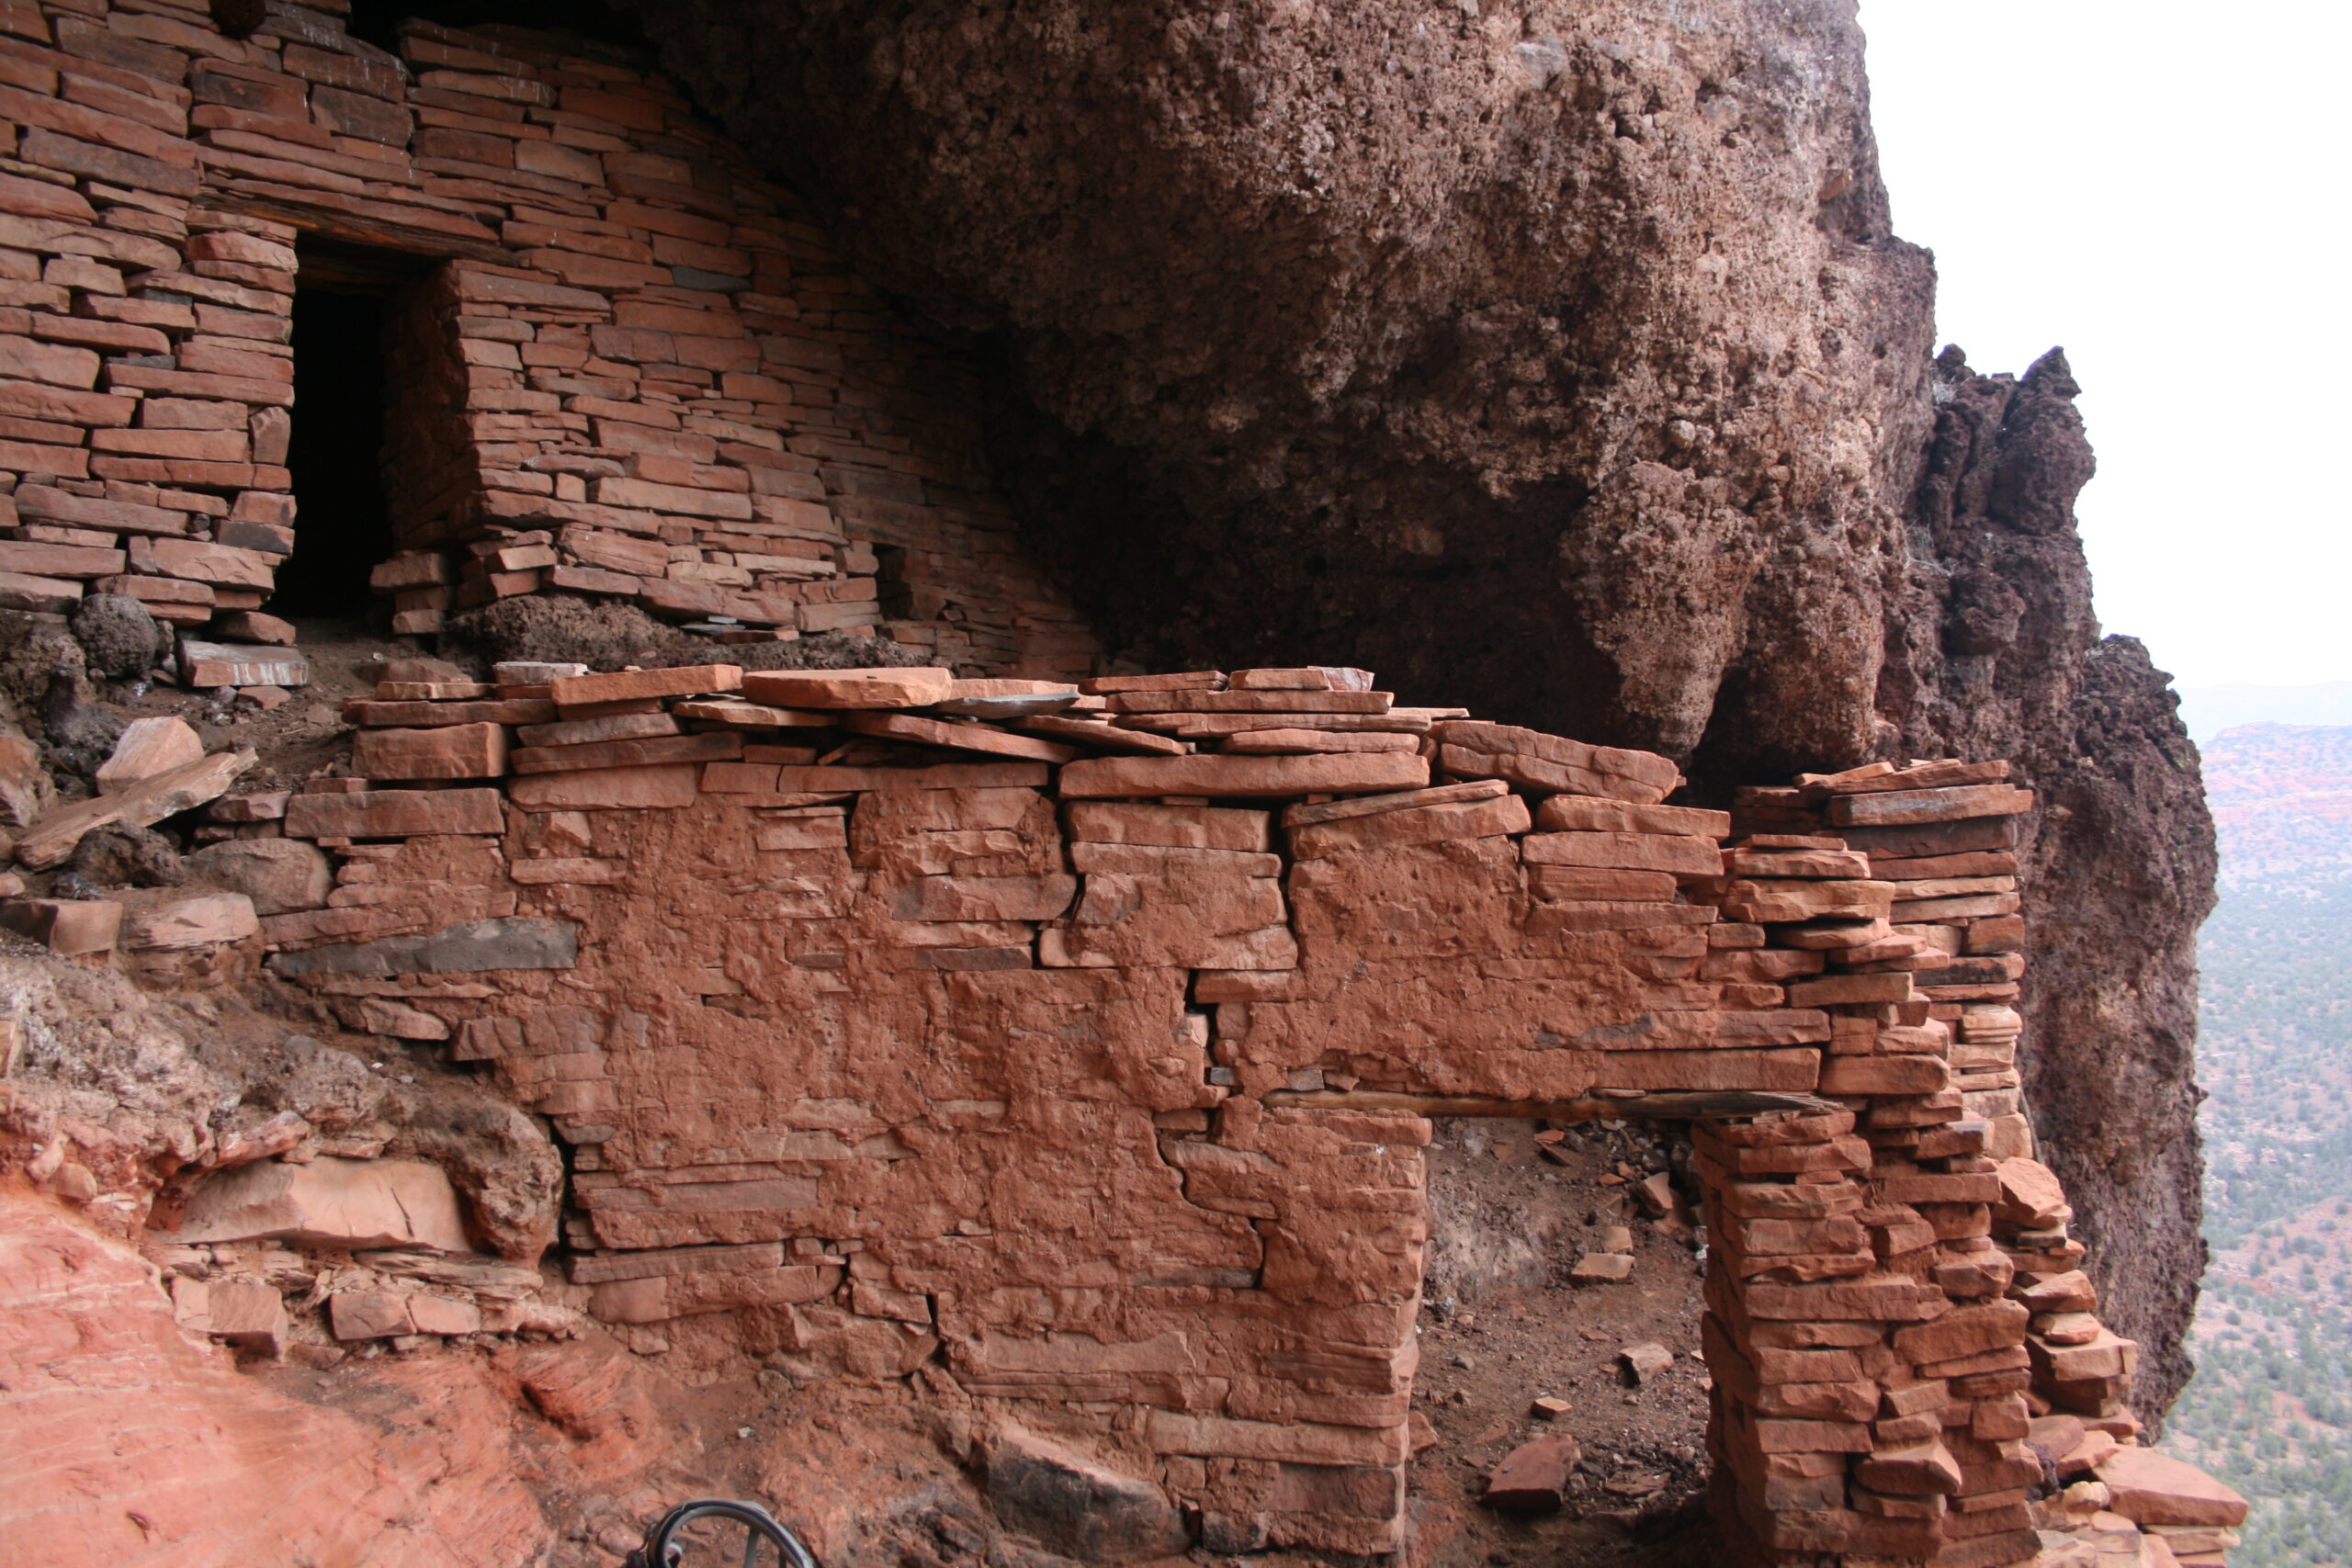 Verde Hohokam cliff dwelling ruins sit near the rim of Sycamore Canyon in Arizona.